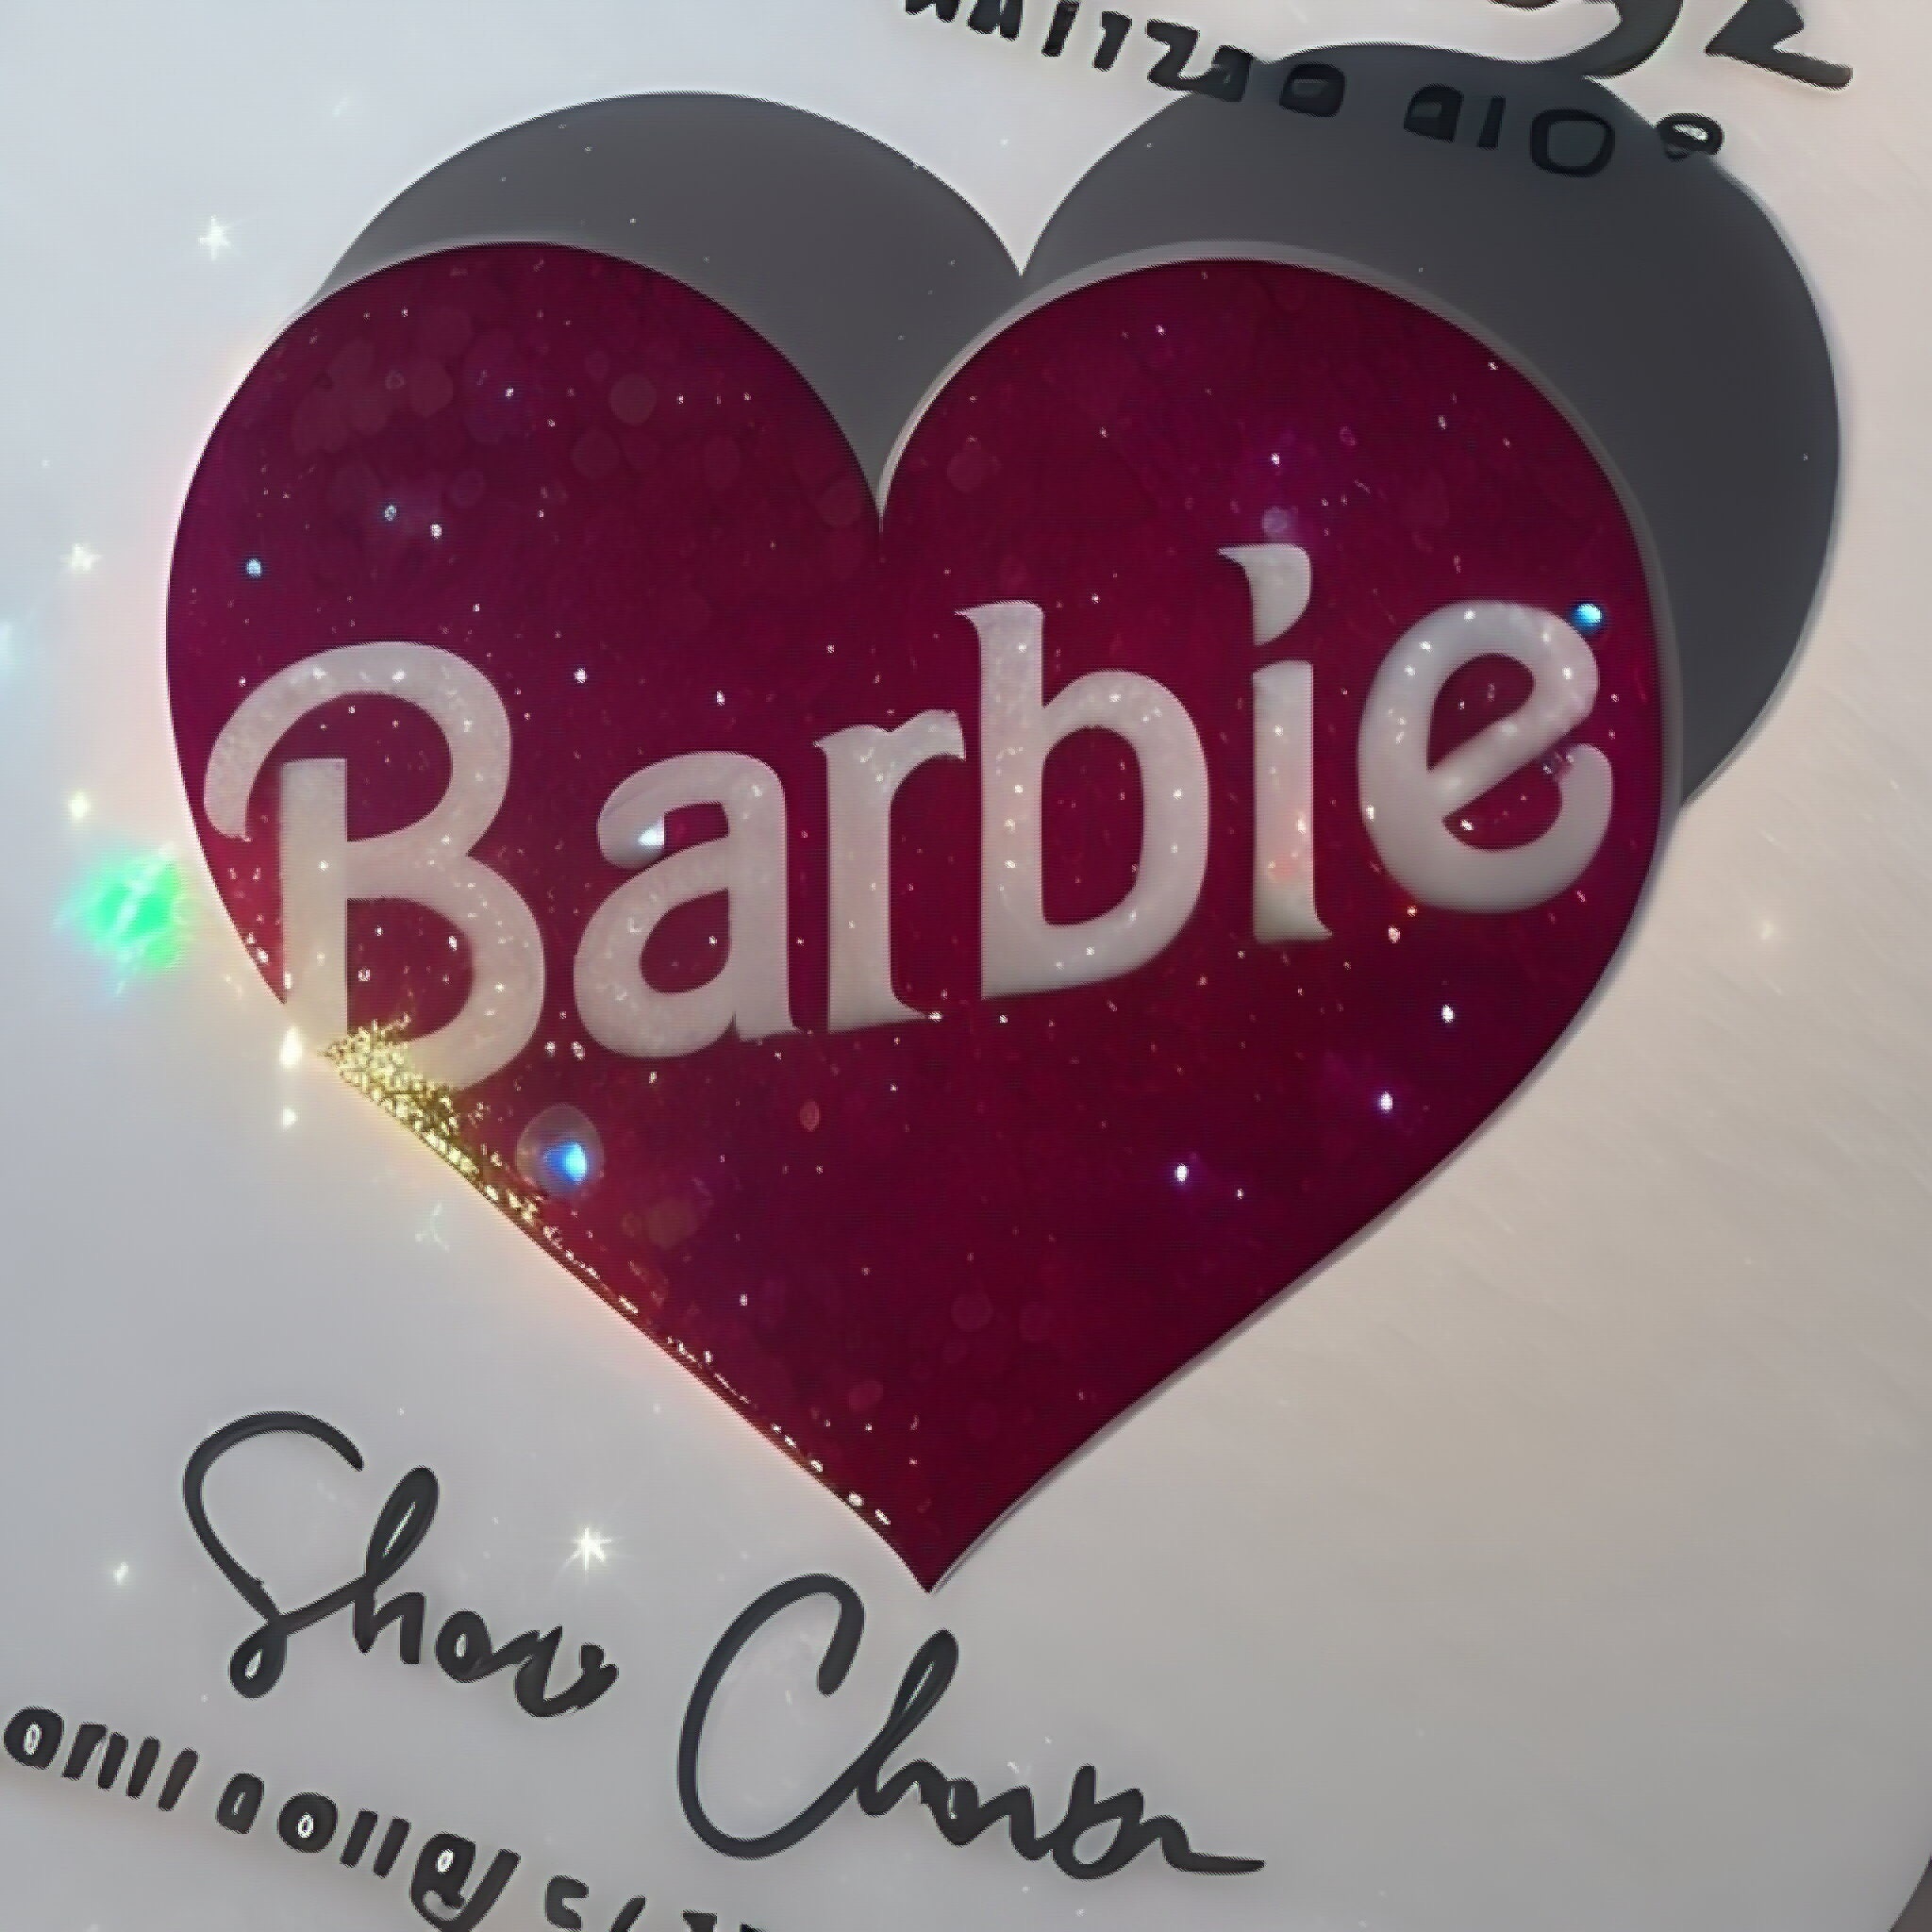 Barbie Shoe Charm| Barbie Croc Charm| Pink Shoe Charm| Girl Croc Charms| Barbie Girl Croc Charms|Lets Go Party Shoe Charm